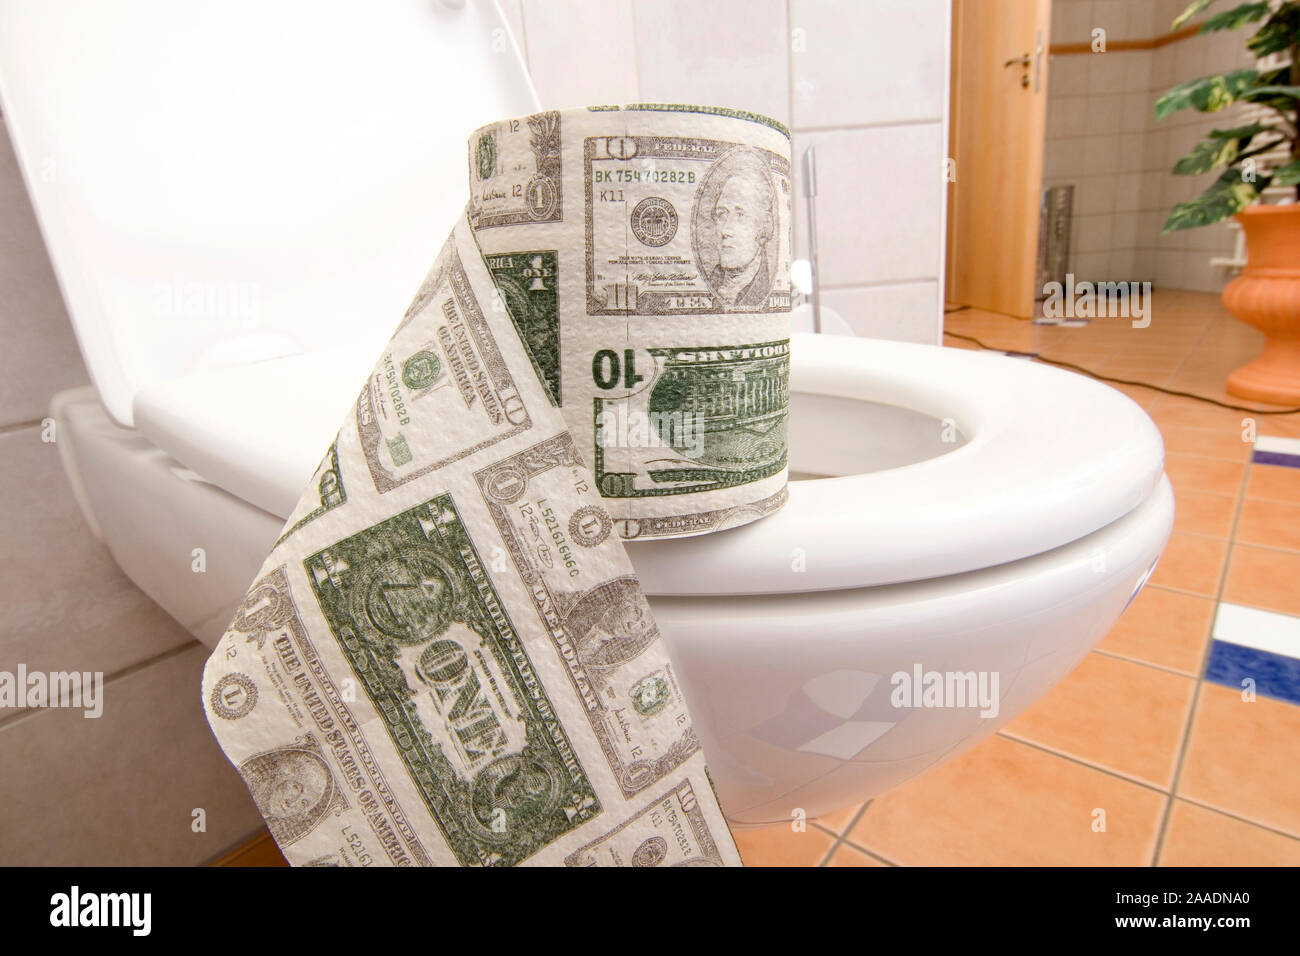 Toilettenpapierrolle mit US-Dollar-Aufdruck Stock Photo